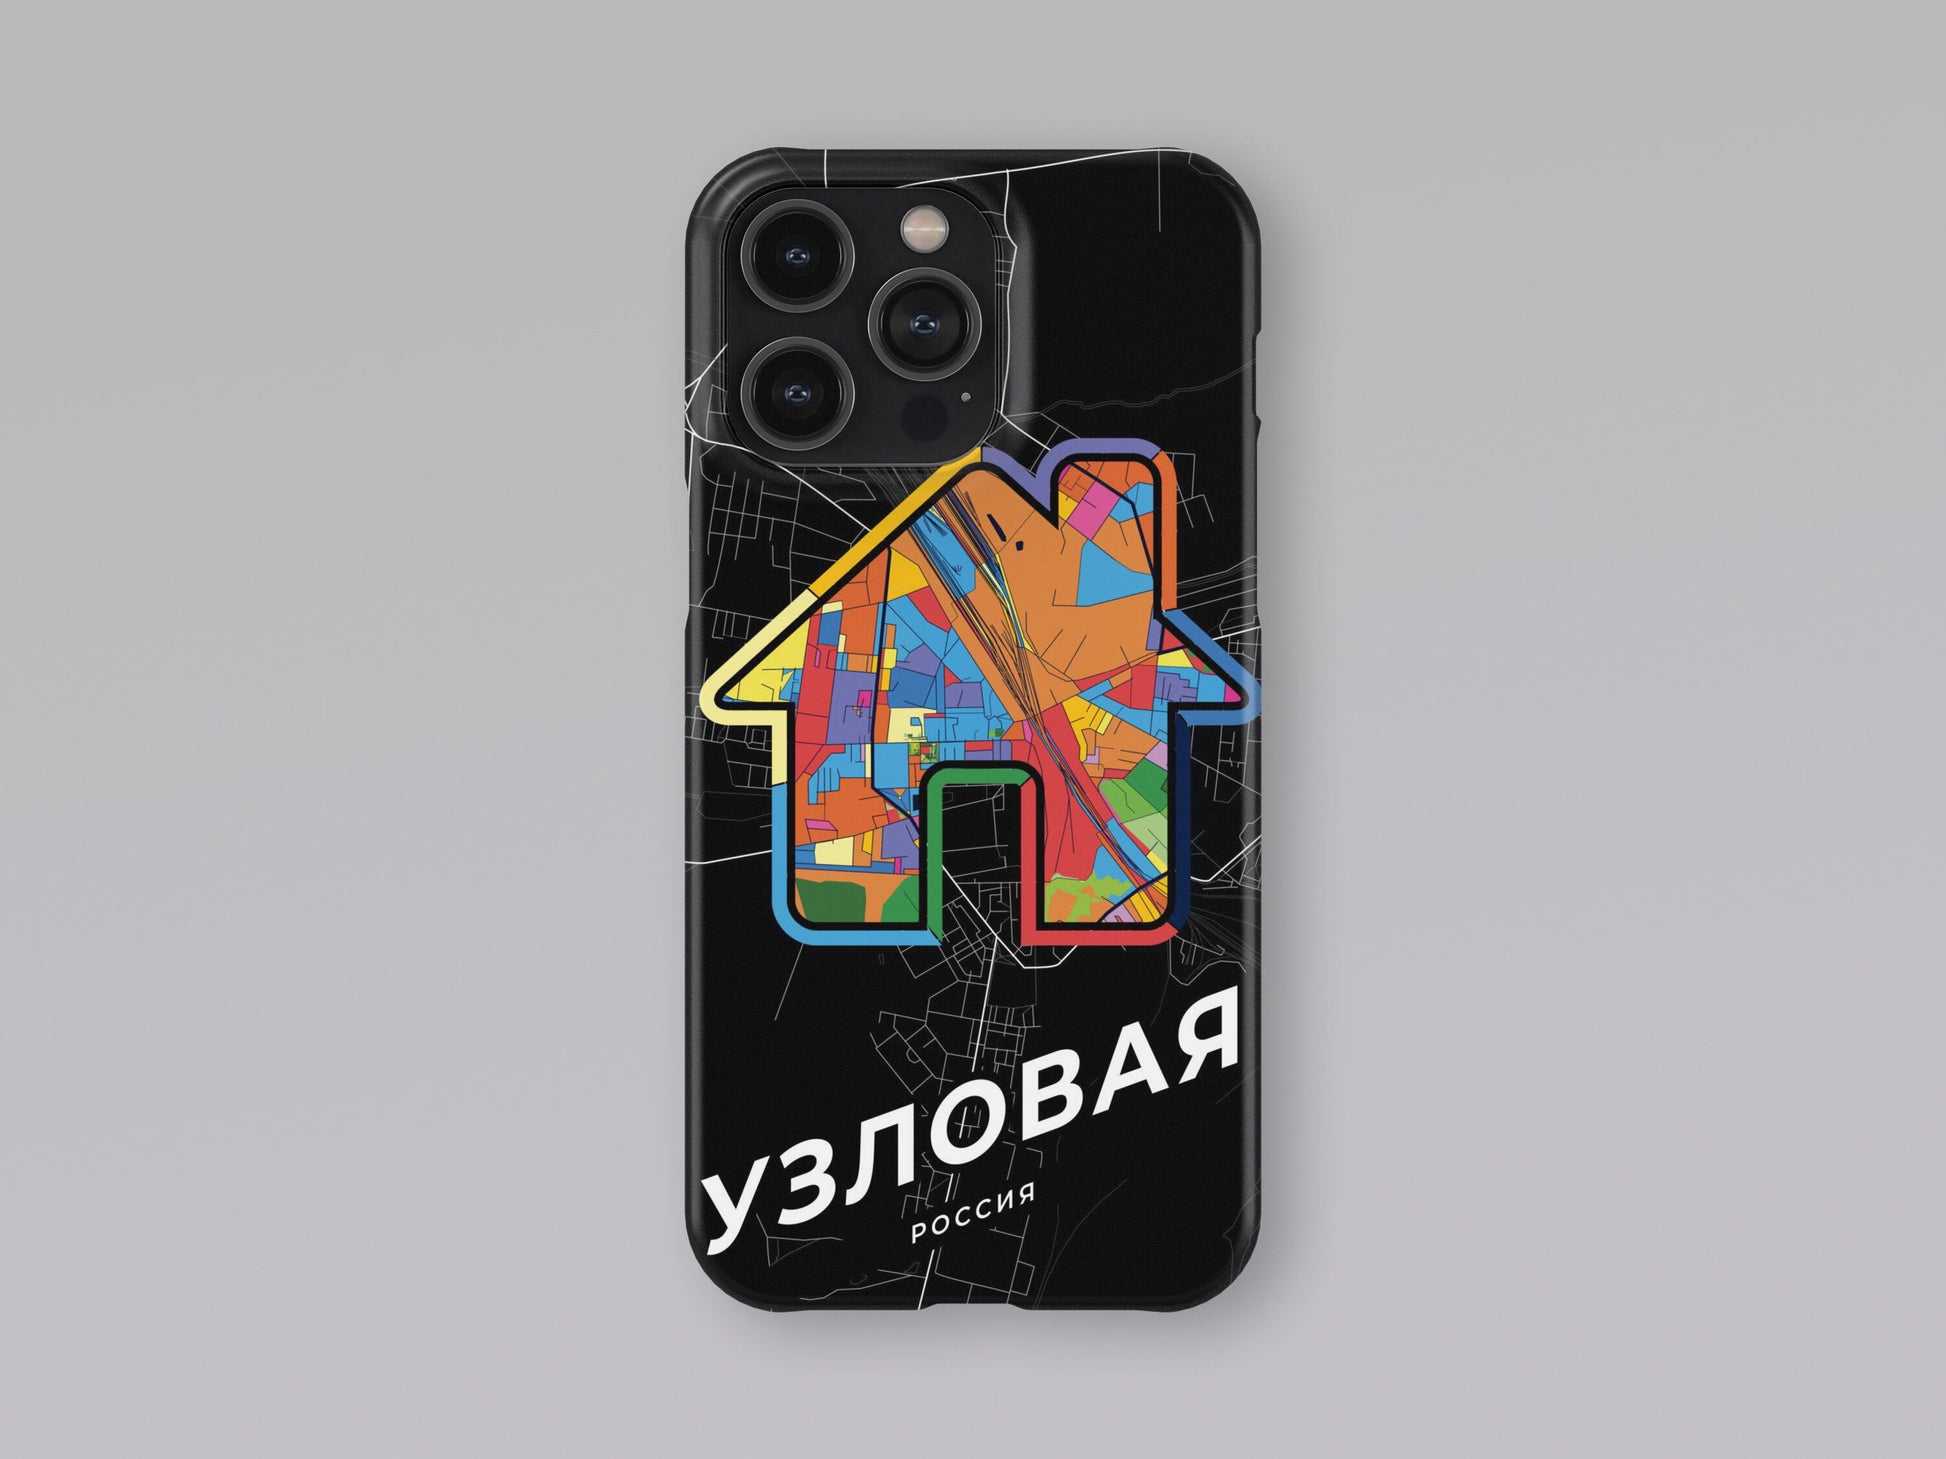 Uzlovaya Russia slim phone case with colorful icon 3